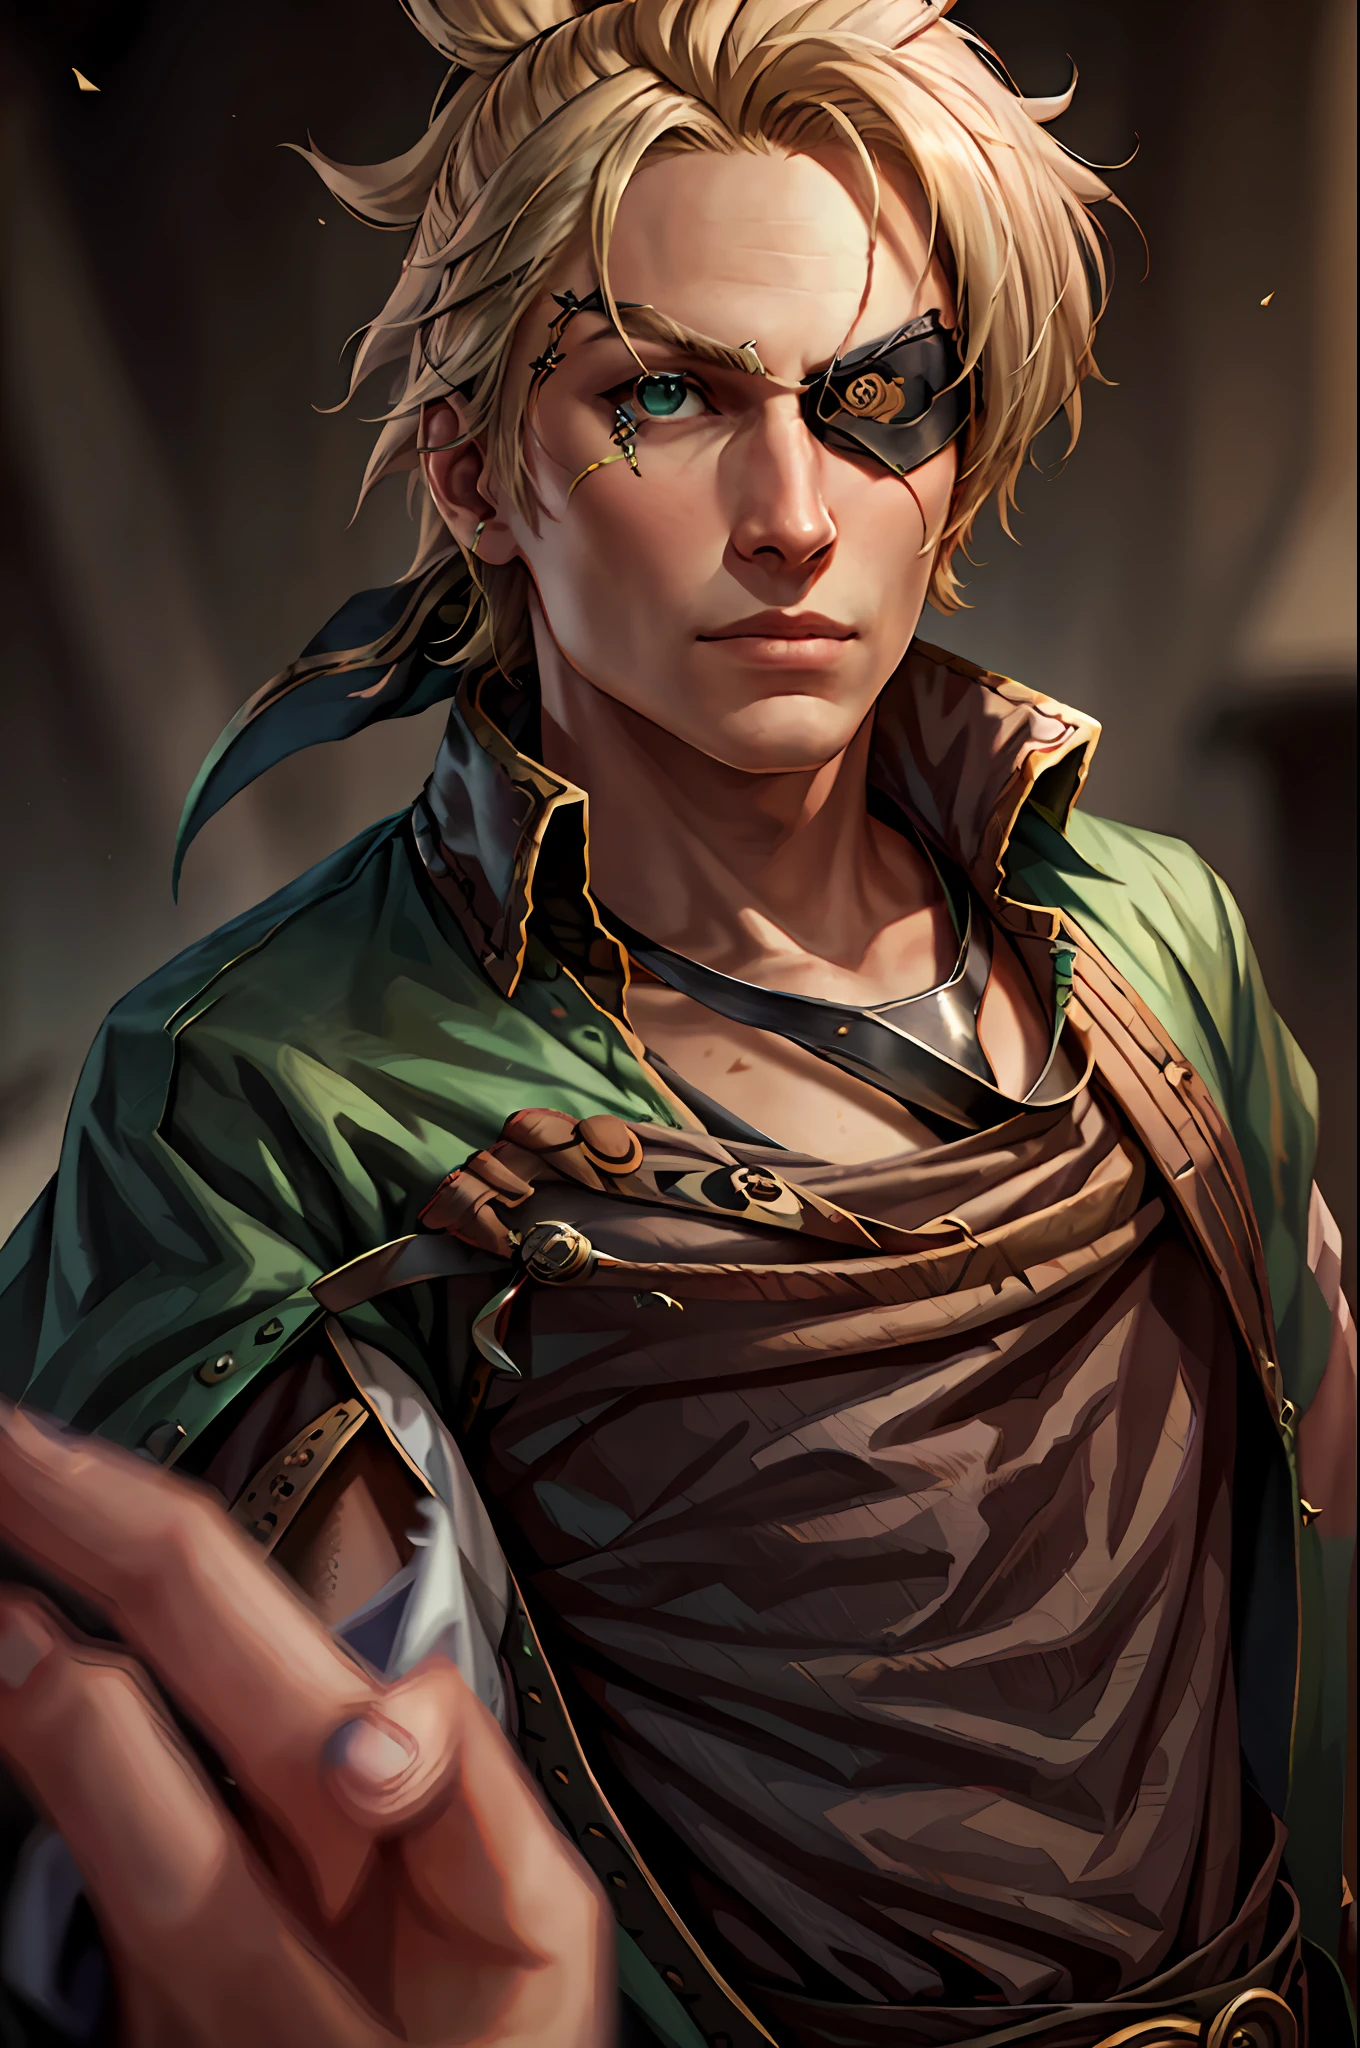 Homem pirata cabelo loiro olhos verdes tapa-olho